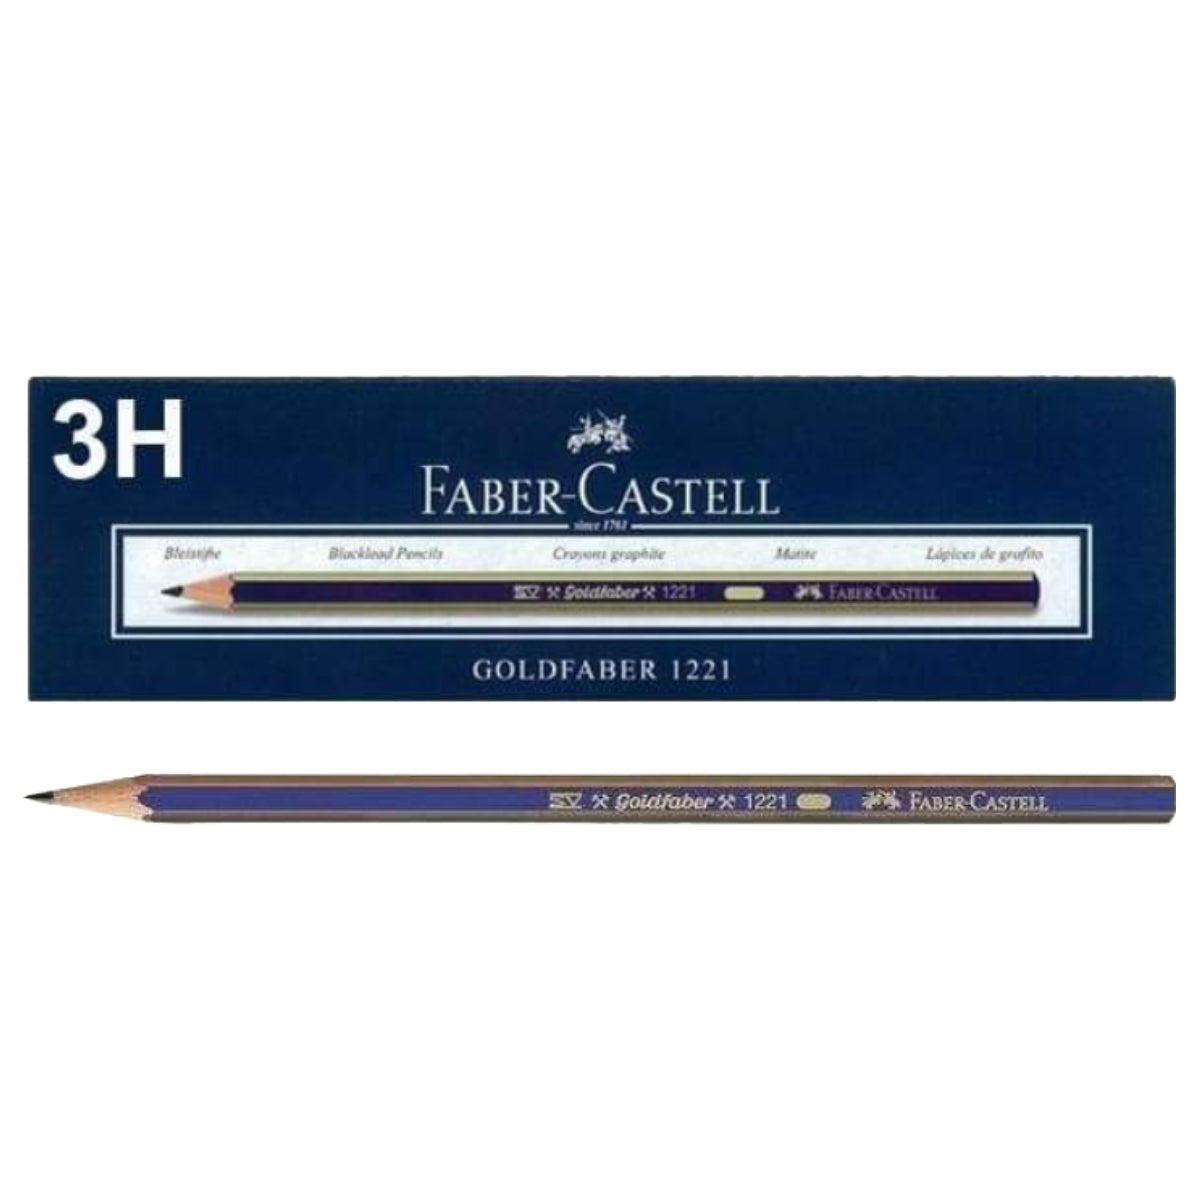 Faber Castell Graphite pencil GOLDFABER 1221, 3H